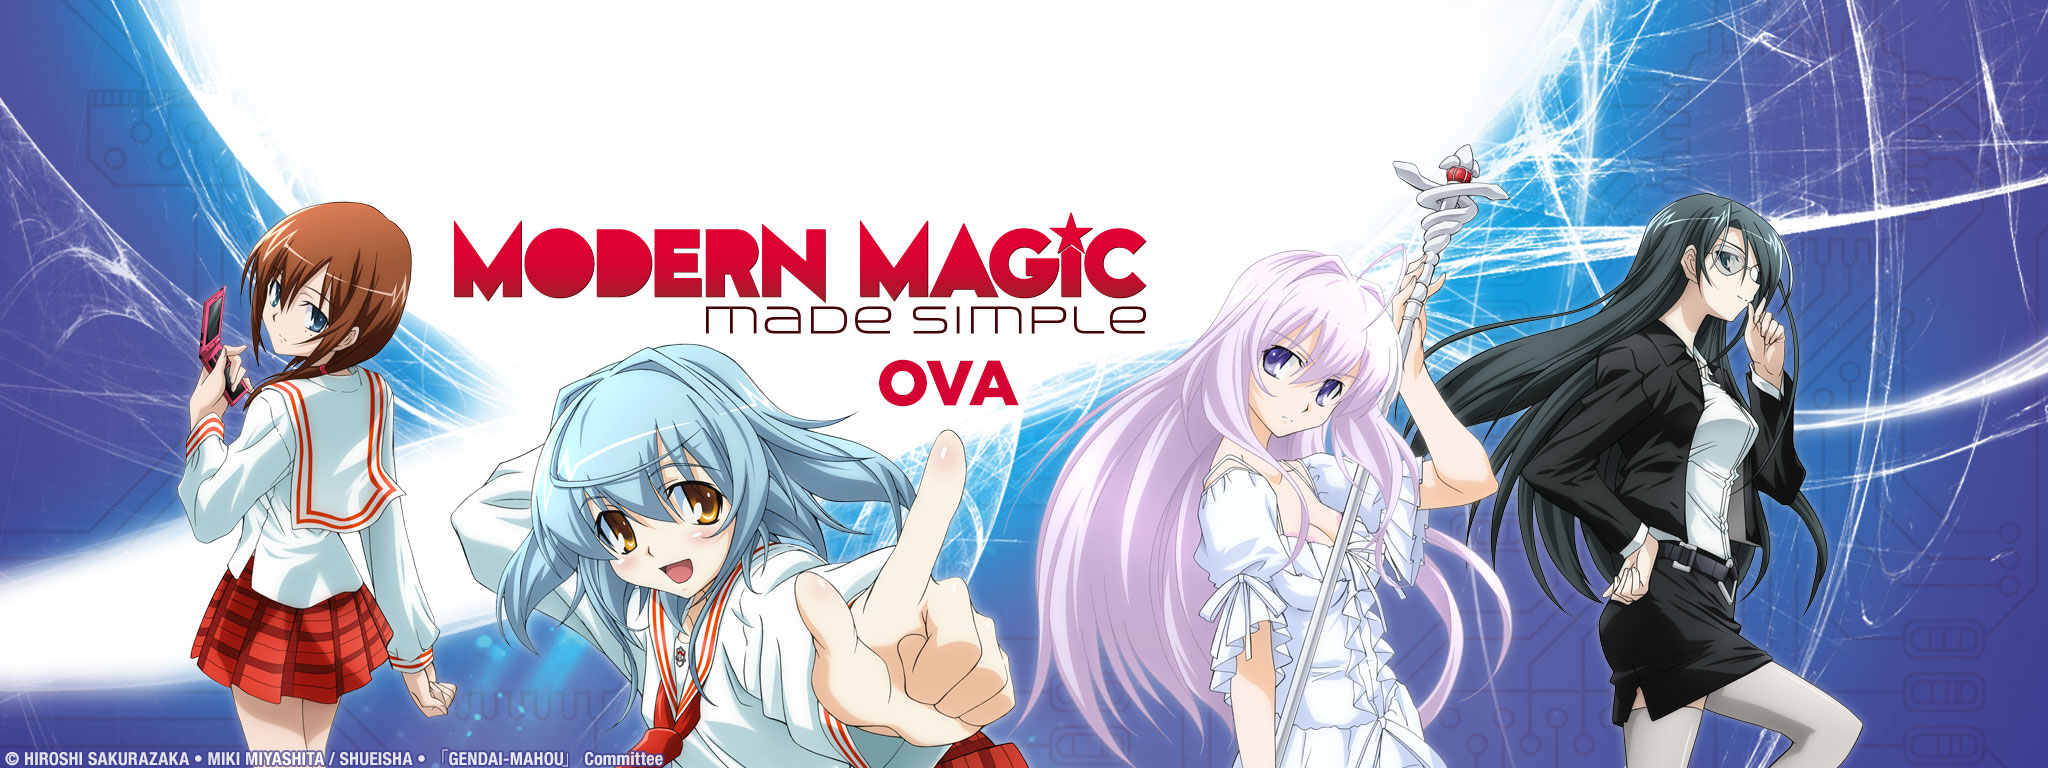 Title Art for Modern Magic Made Simple OVA